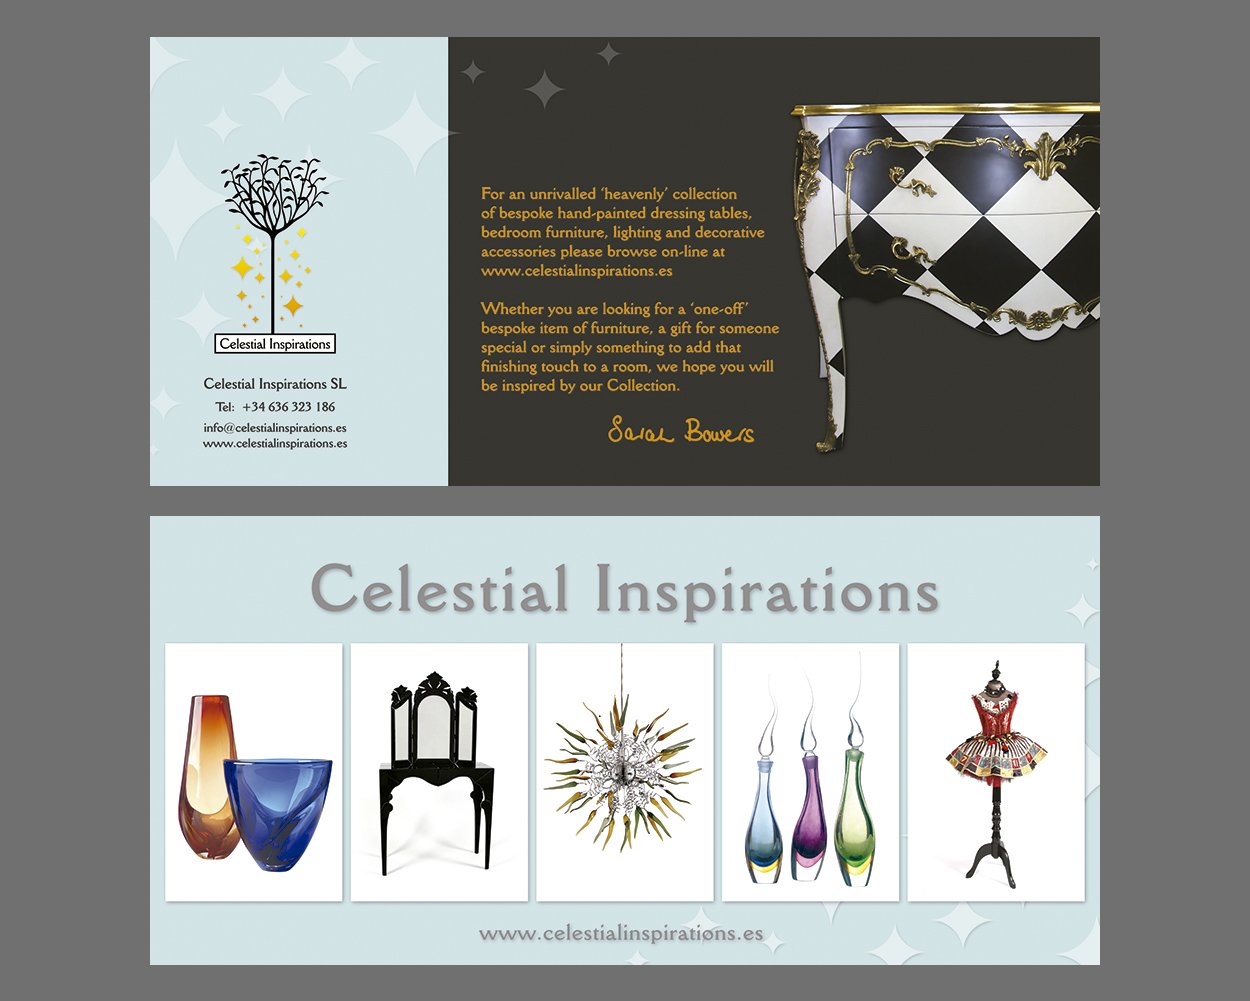 Celestial inspirations